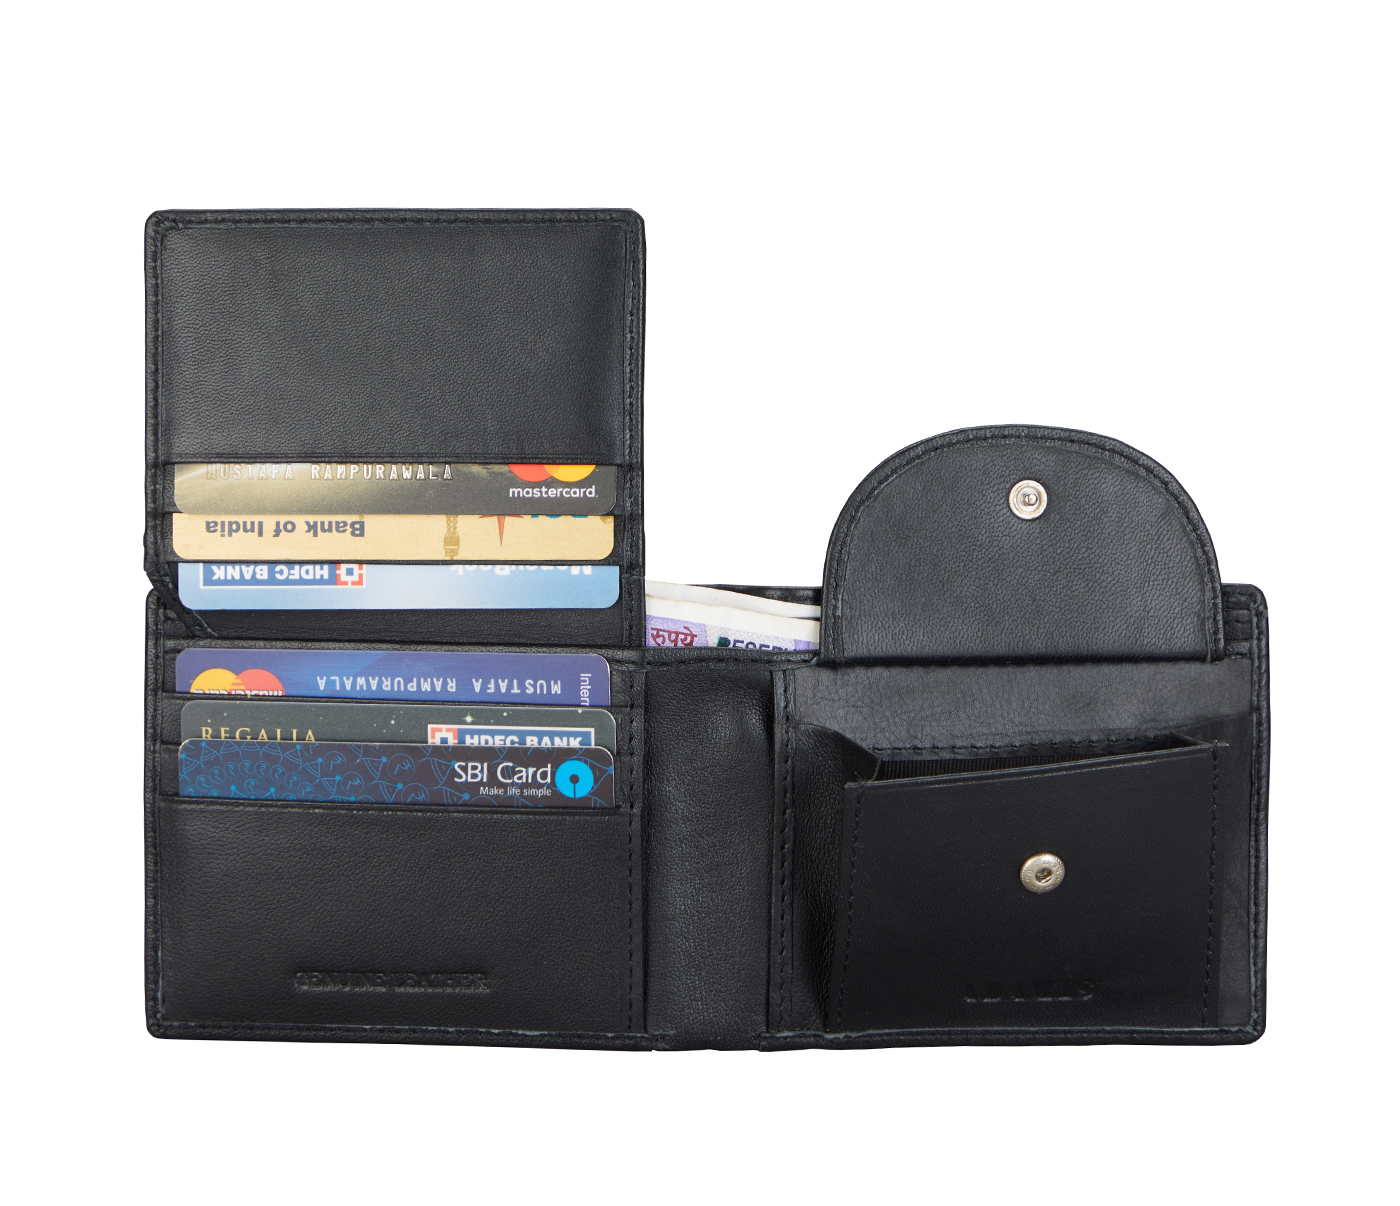 Wallet-Hudson-Men's bifold wallet with coin pocket in Genuine Leather - Black